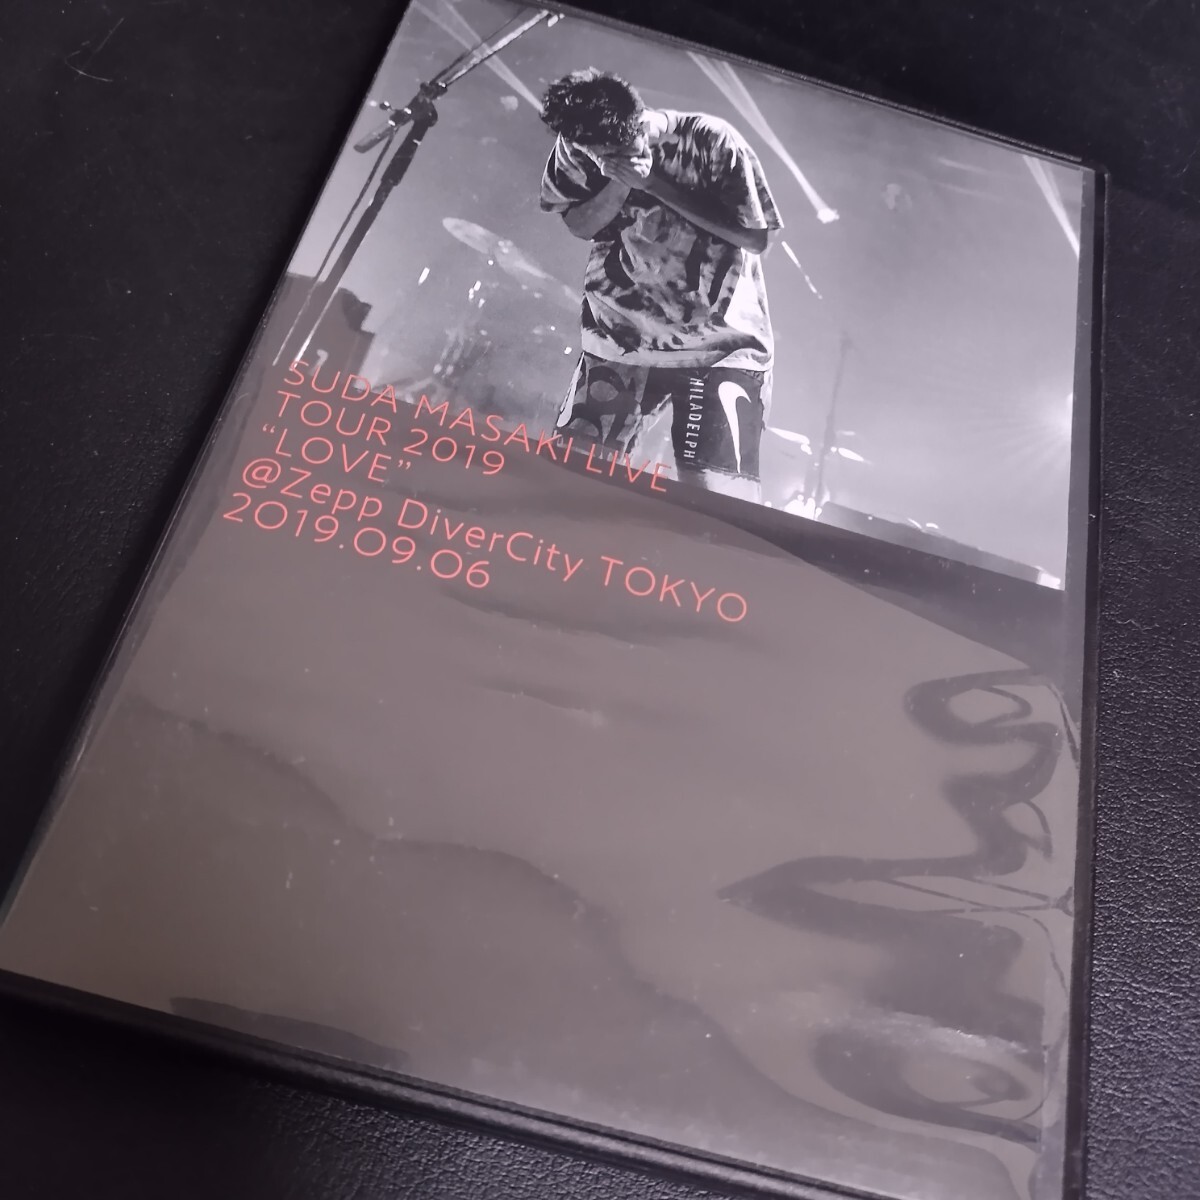 【菅田将暉】 SUDA MASAKI LIVE TOUR 2019 ”LOVE”＠Zepp DiverCity TOKYO 2019.09.06 [通常版] 邦楽DVD 棚C_画像3